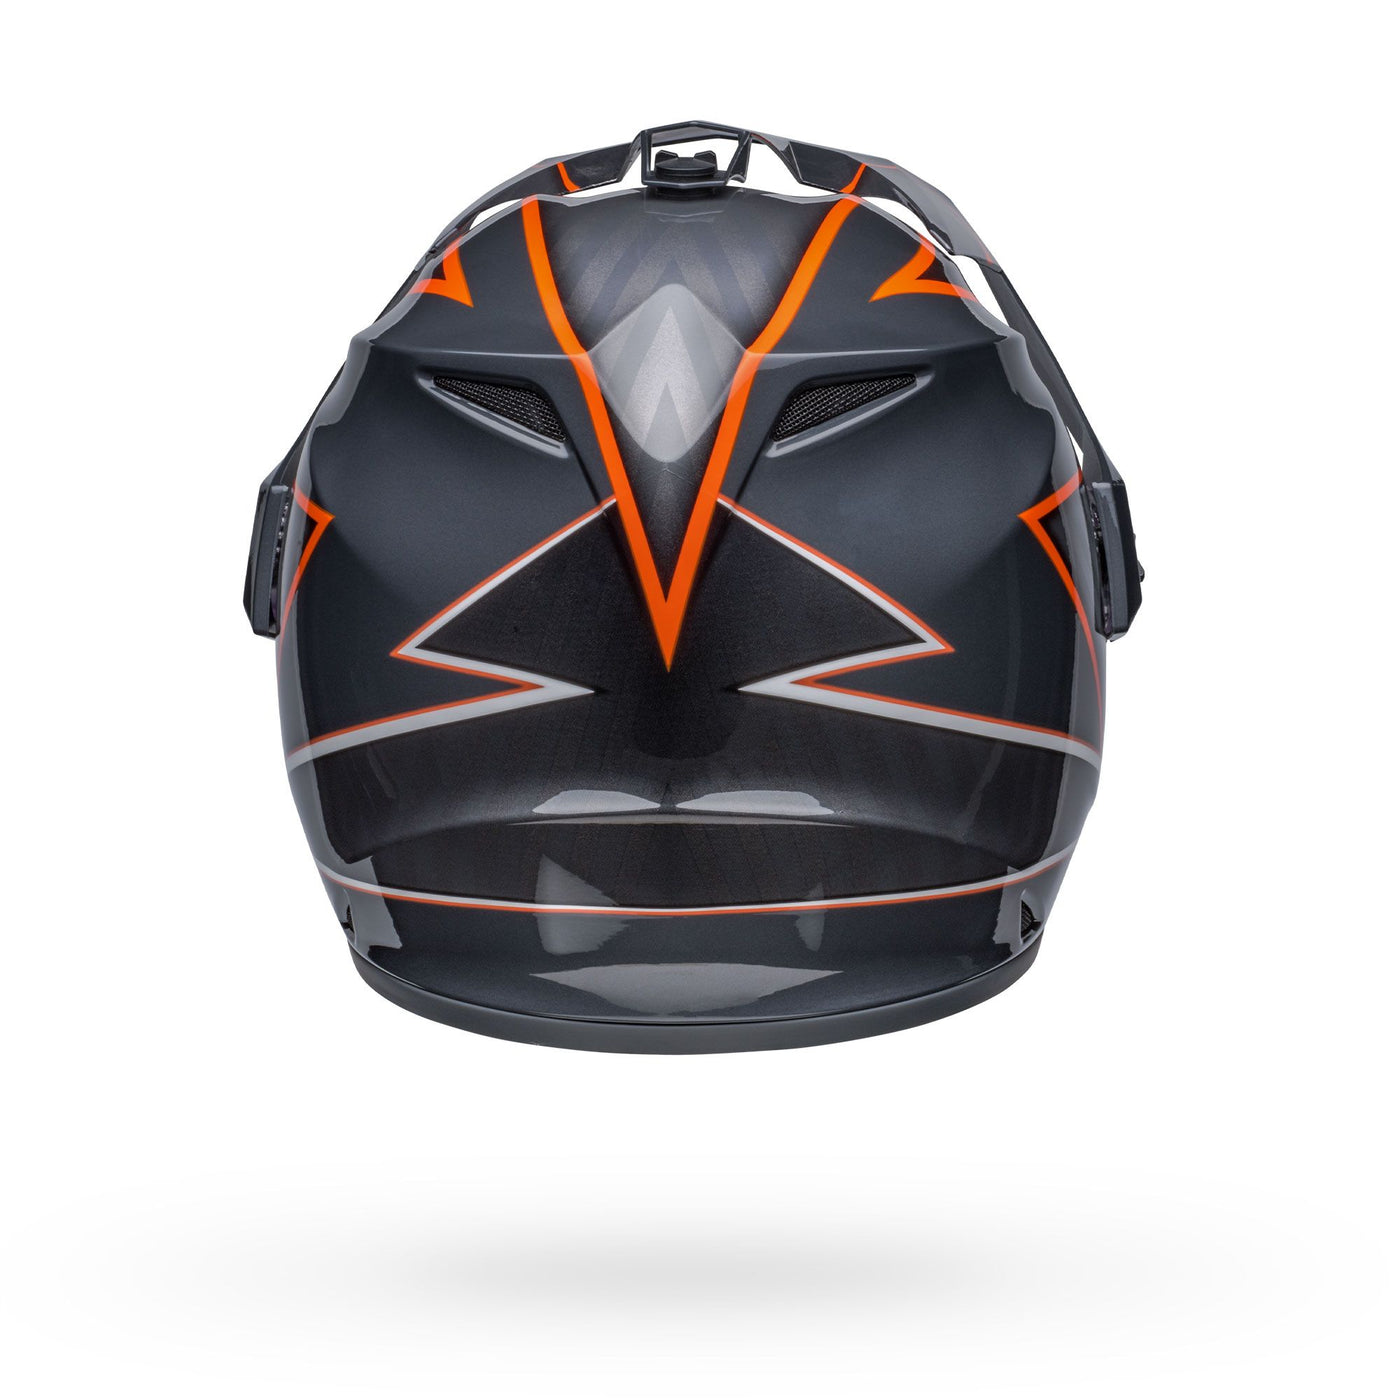 bell mx 9 adventure mips dirt motorcycle helmet dalton gloss black orange back